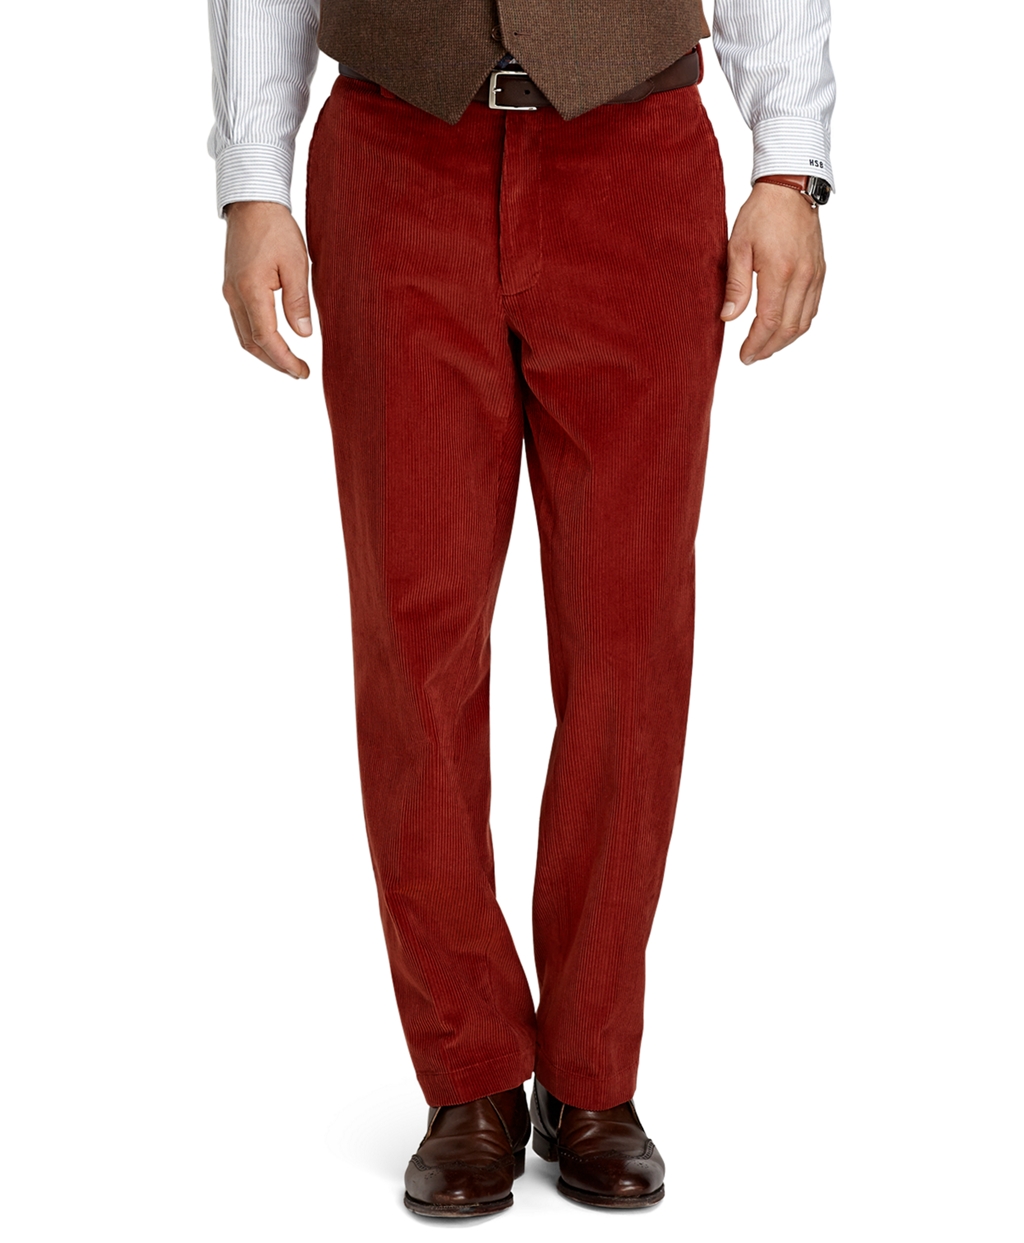 Lyst - Brooks Brothers Hudson 8wale Corduroy Pants in Orange for Men